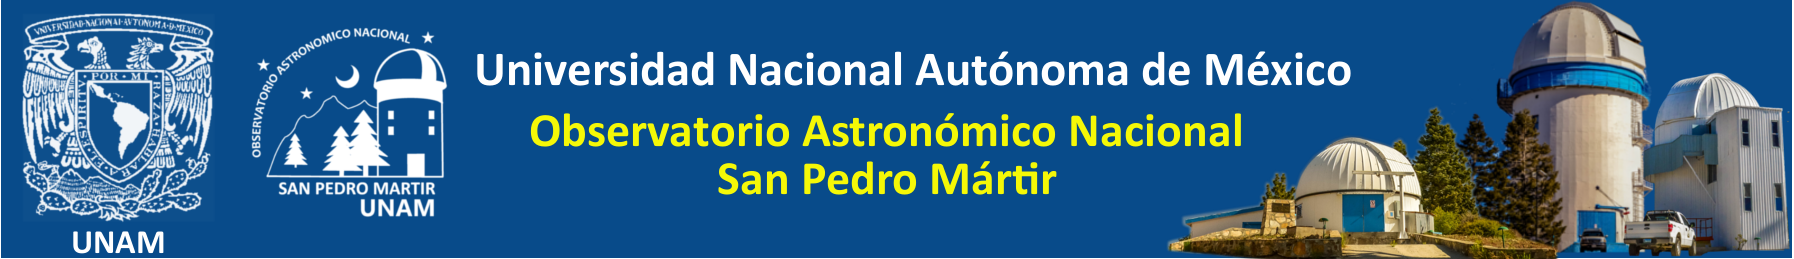 Observatorio Astronómico Nacional San Pedro Mártir - UNAM, México